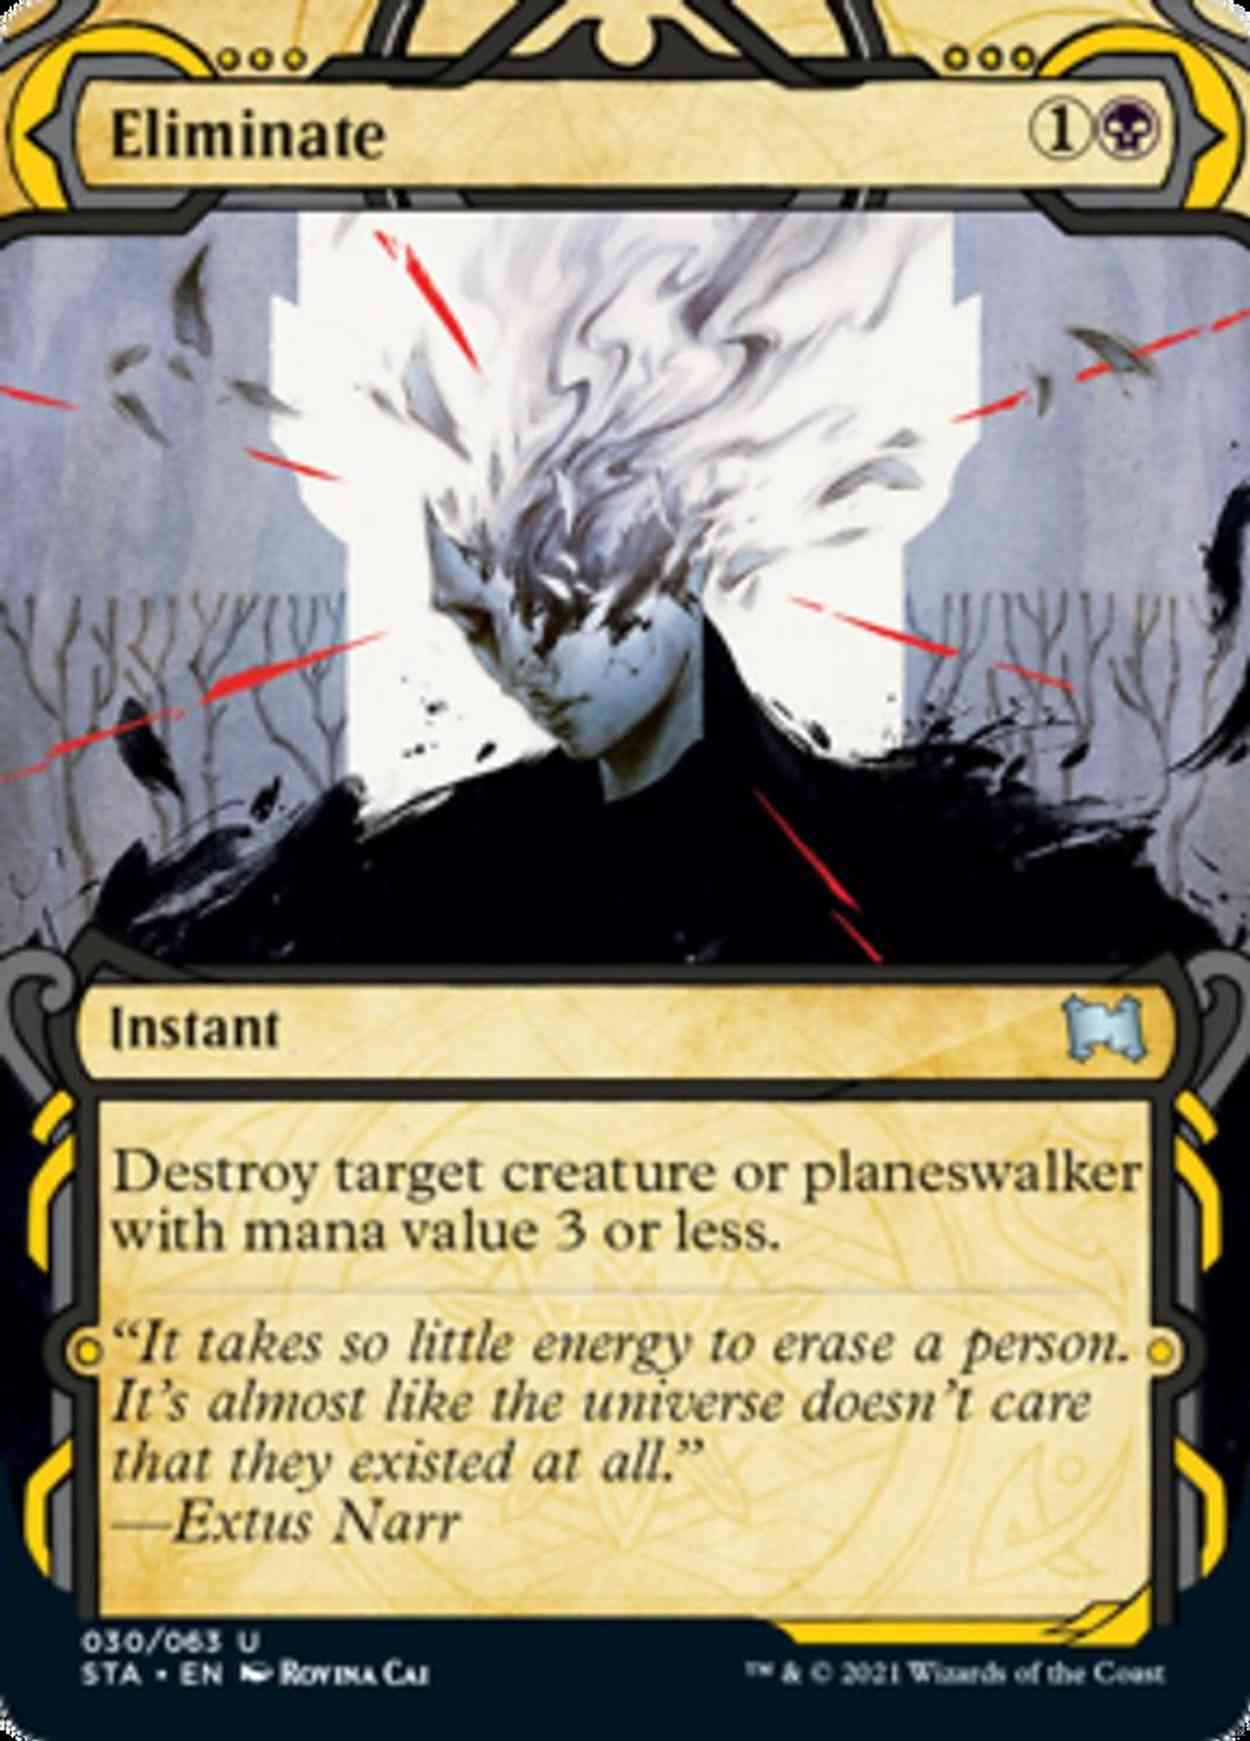 Eliminate (Foil Etched) magic card front